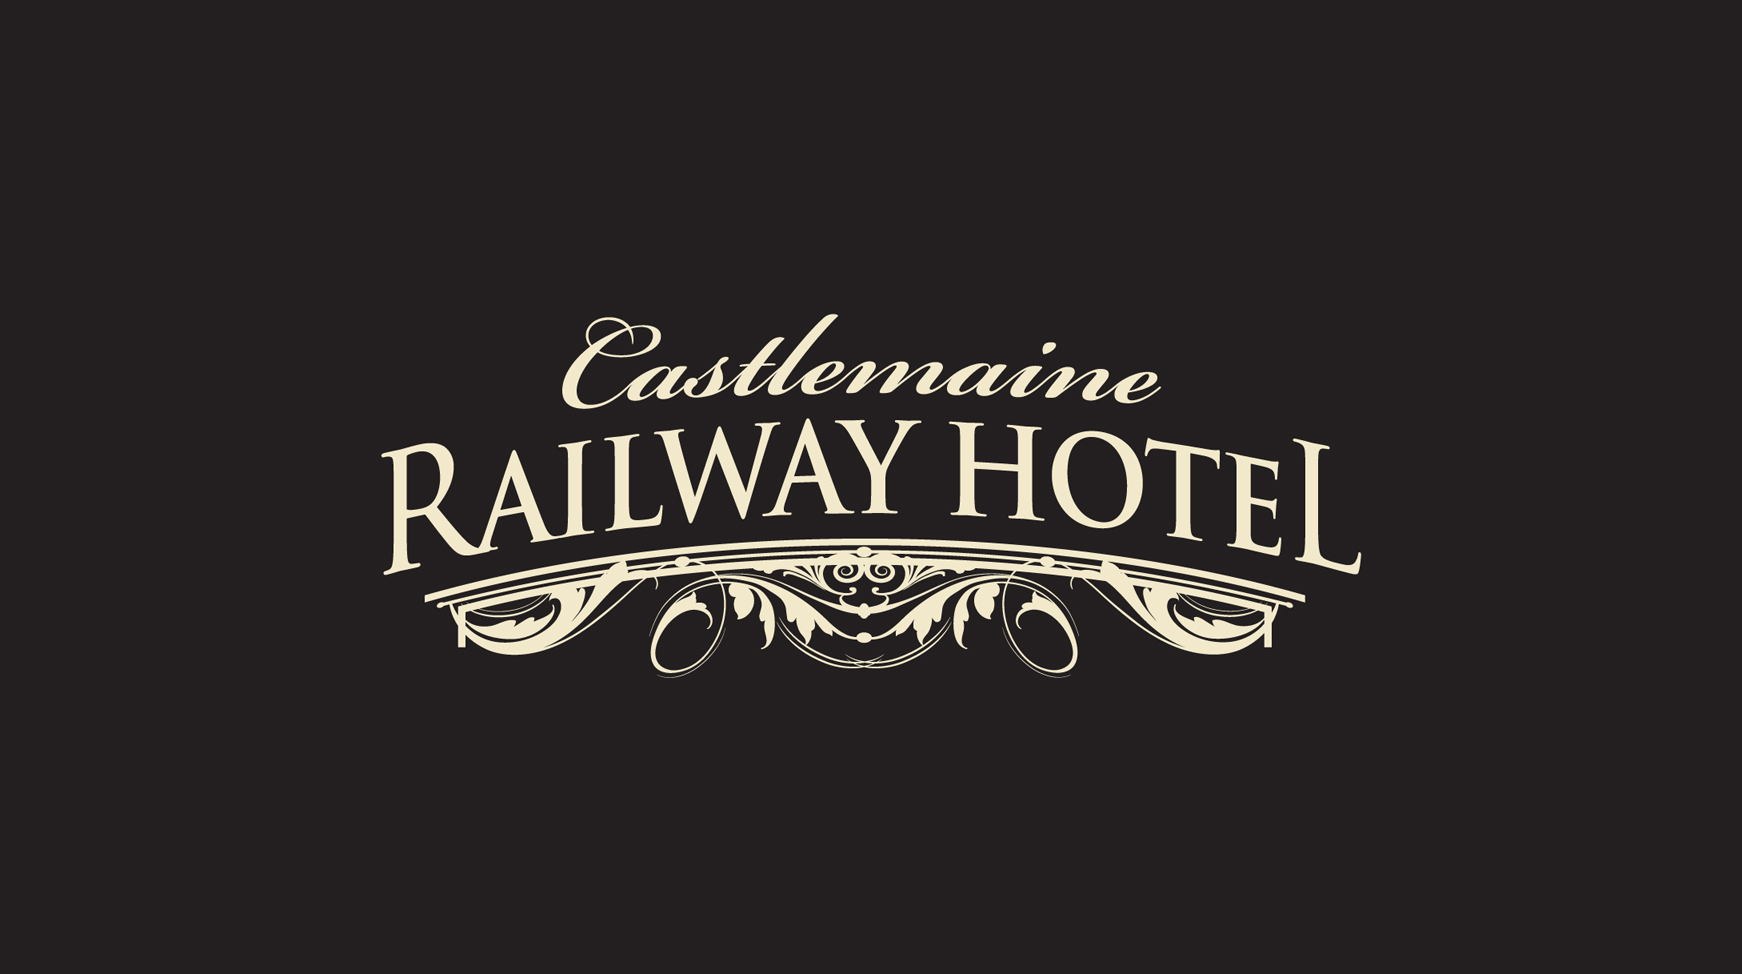 Railway Hotel Castlemaine - Surfers Gold Coast